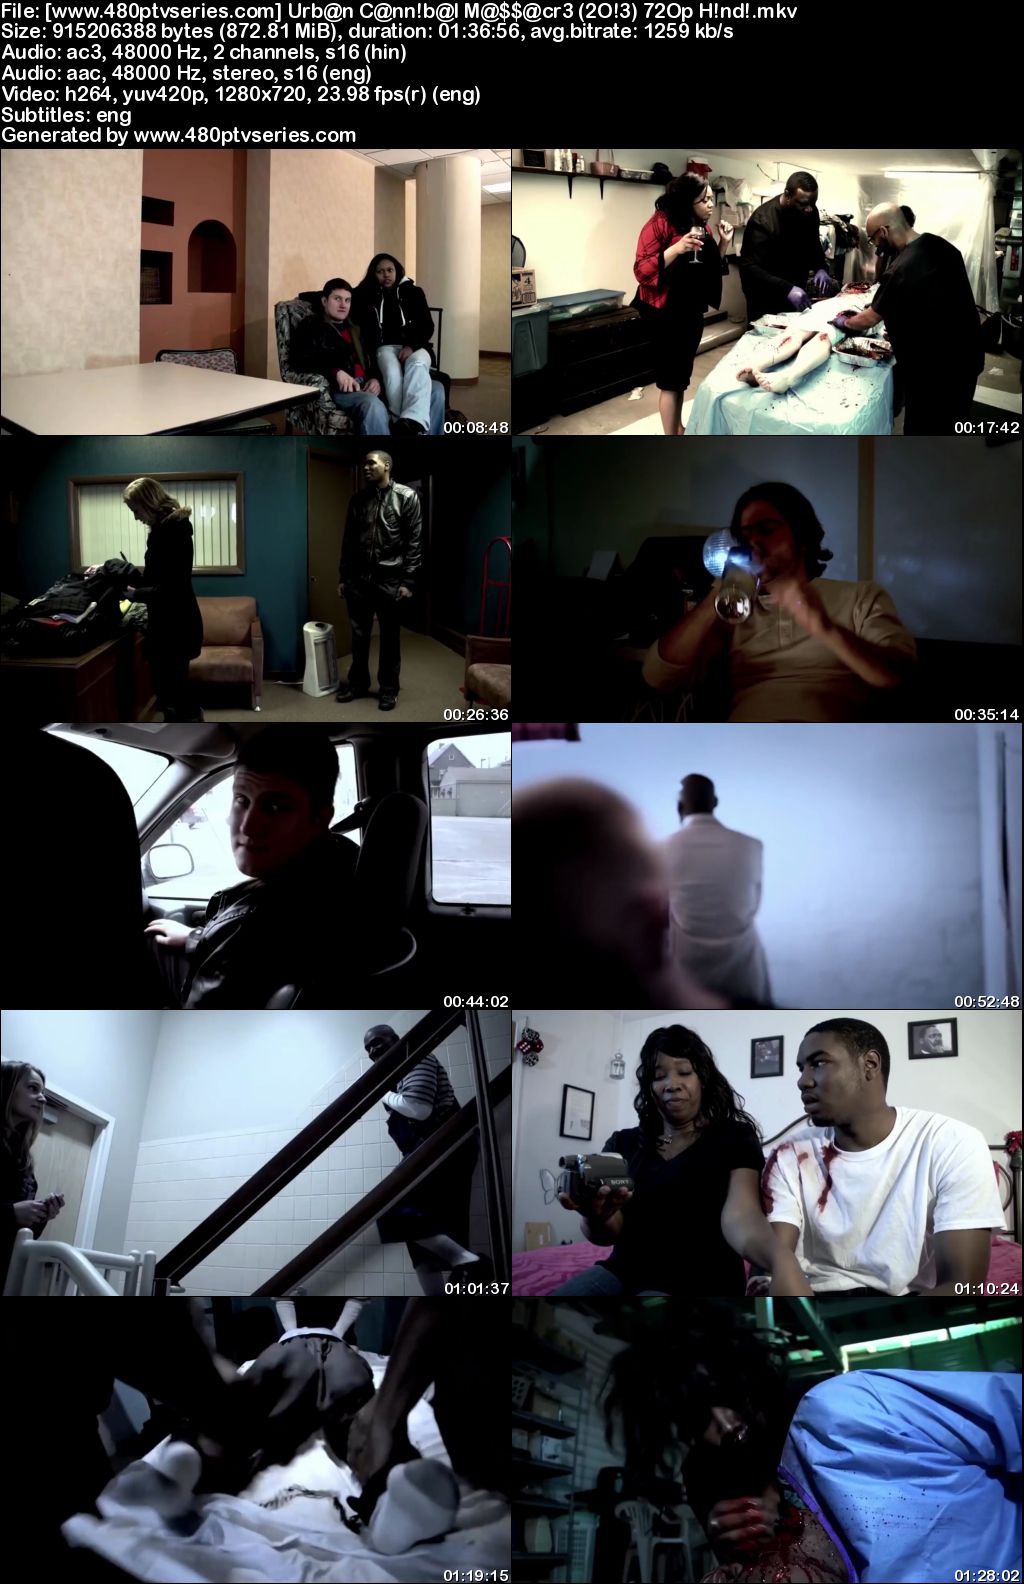 Watch Online Free Urban Cannibal Massacre (2013) Full Hindi Dual Audio Movie Download 480p 720p Web-DL